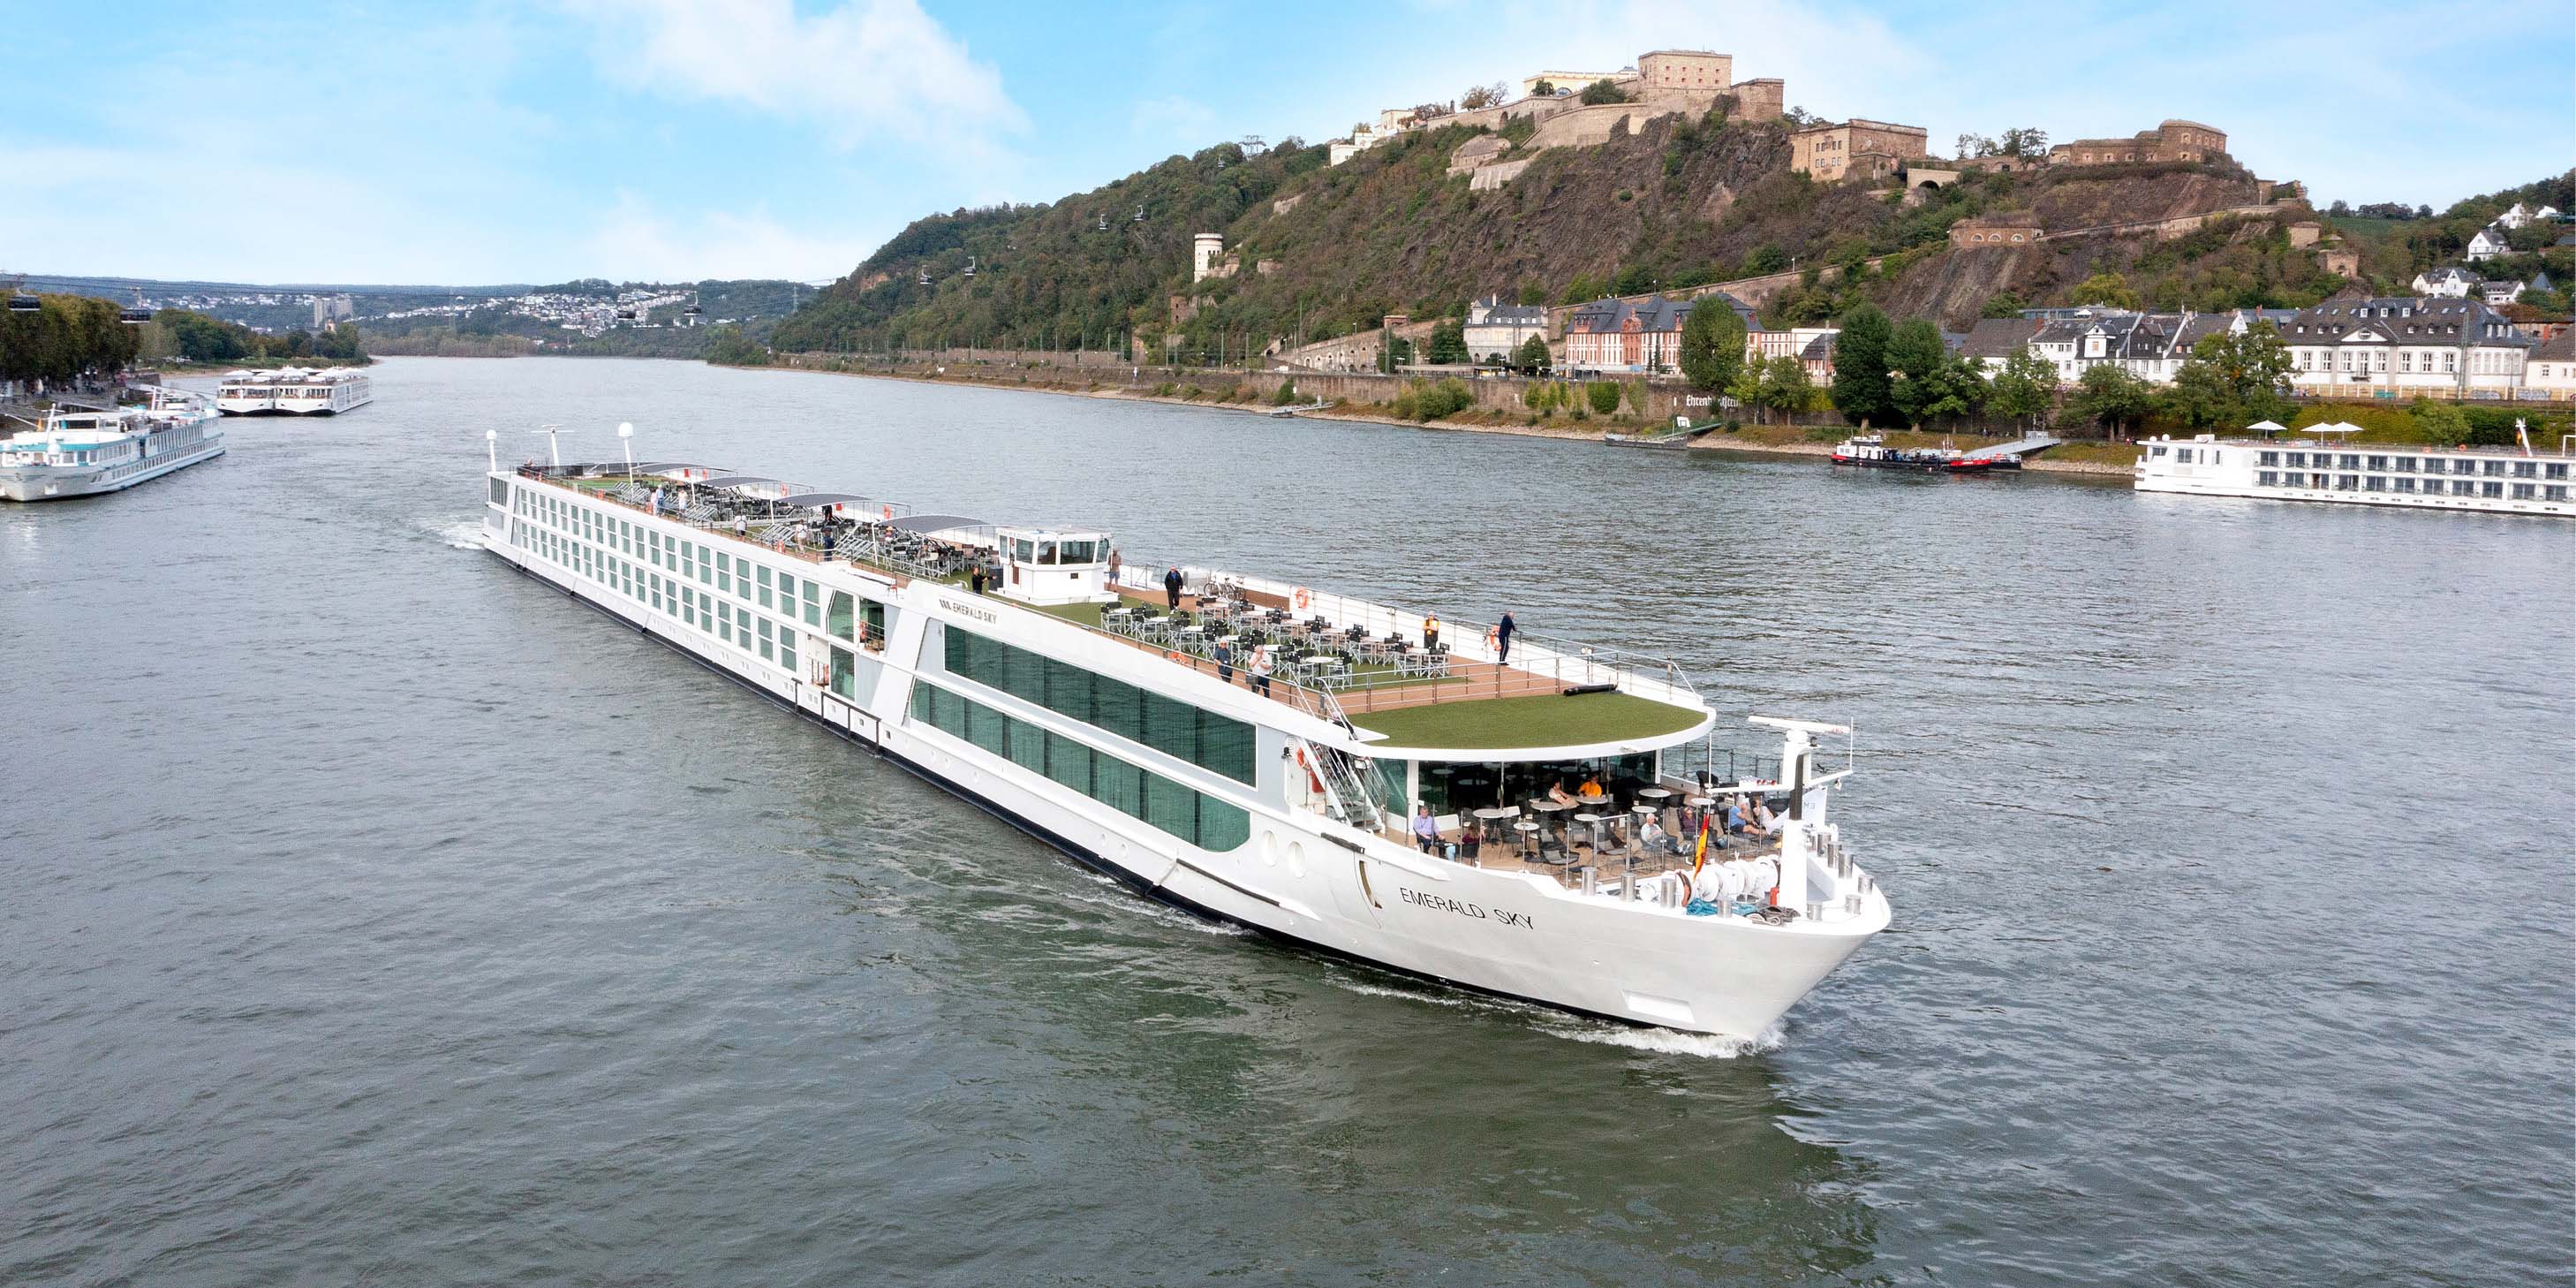 Luxury river ship sailing through Koblenz, Germany